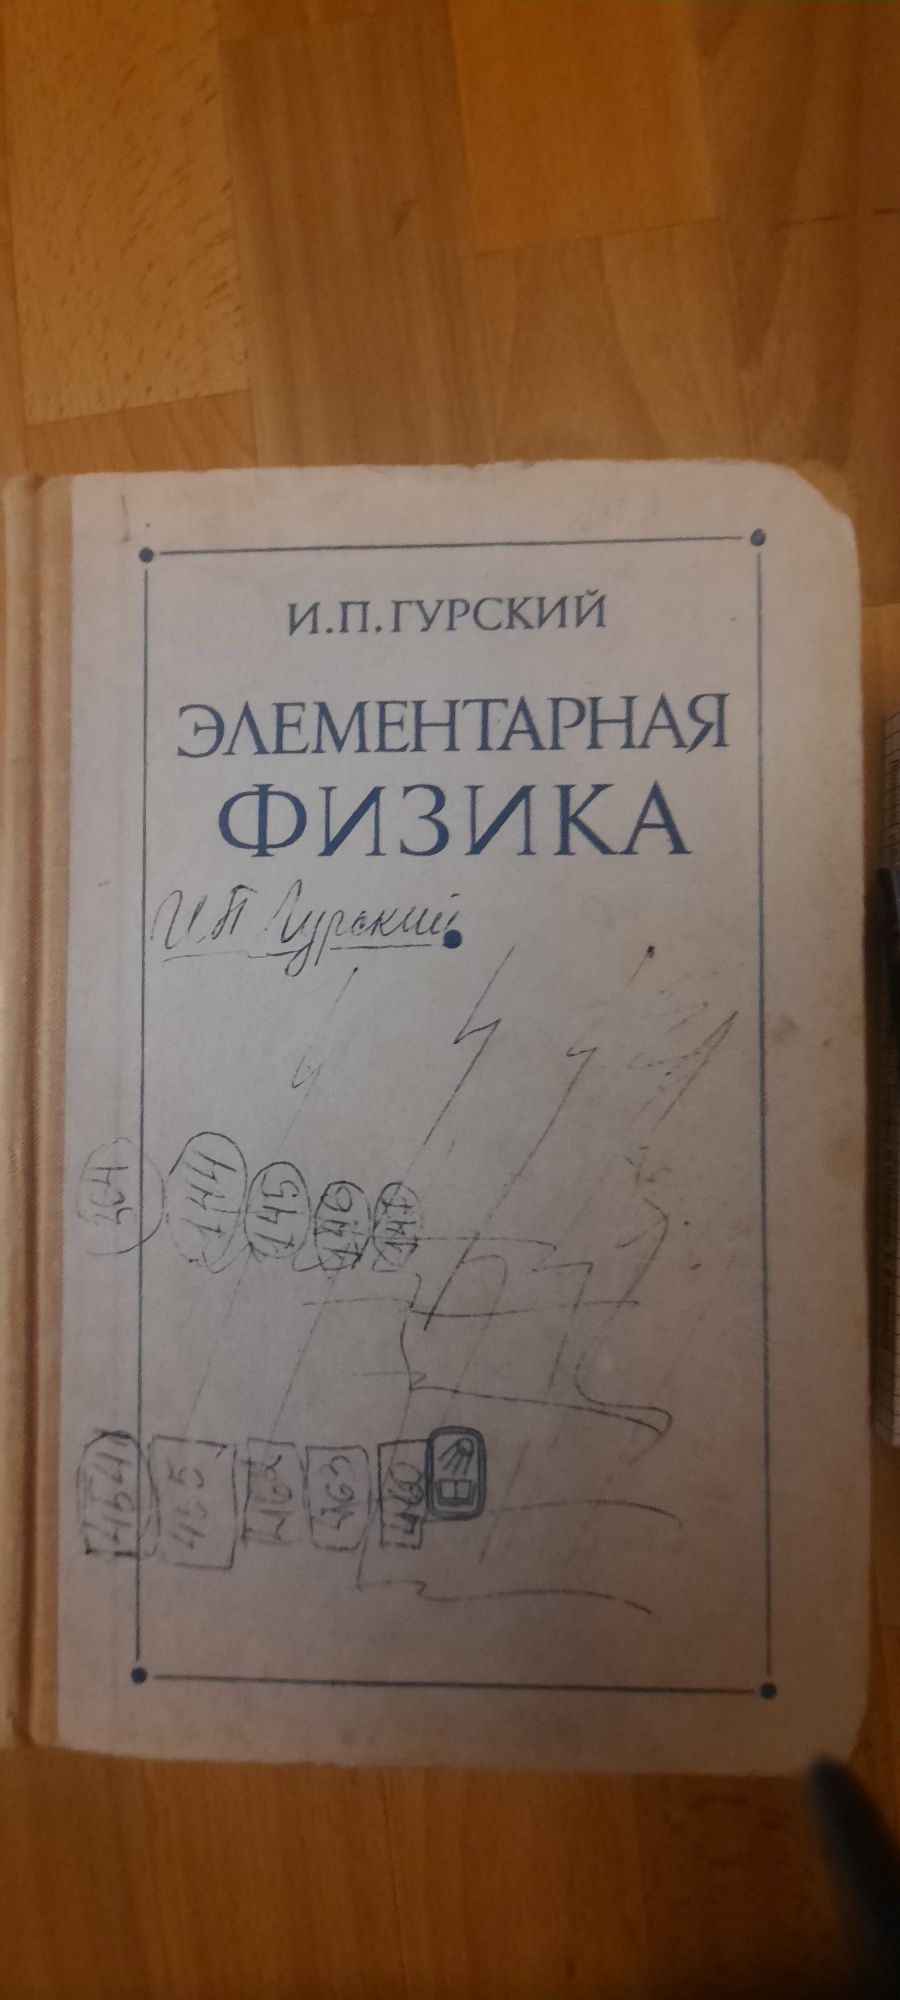 Учебники физики советских времен. Перышкин,Родина